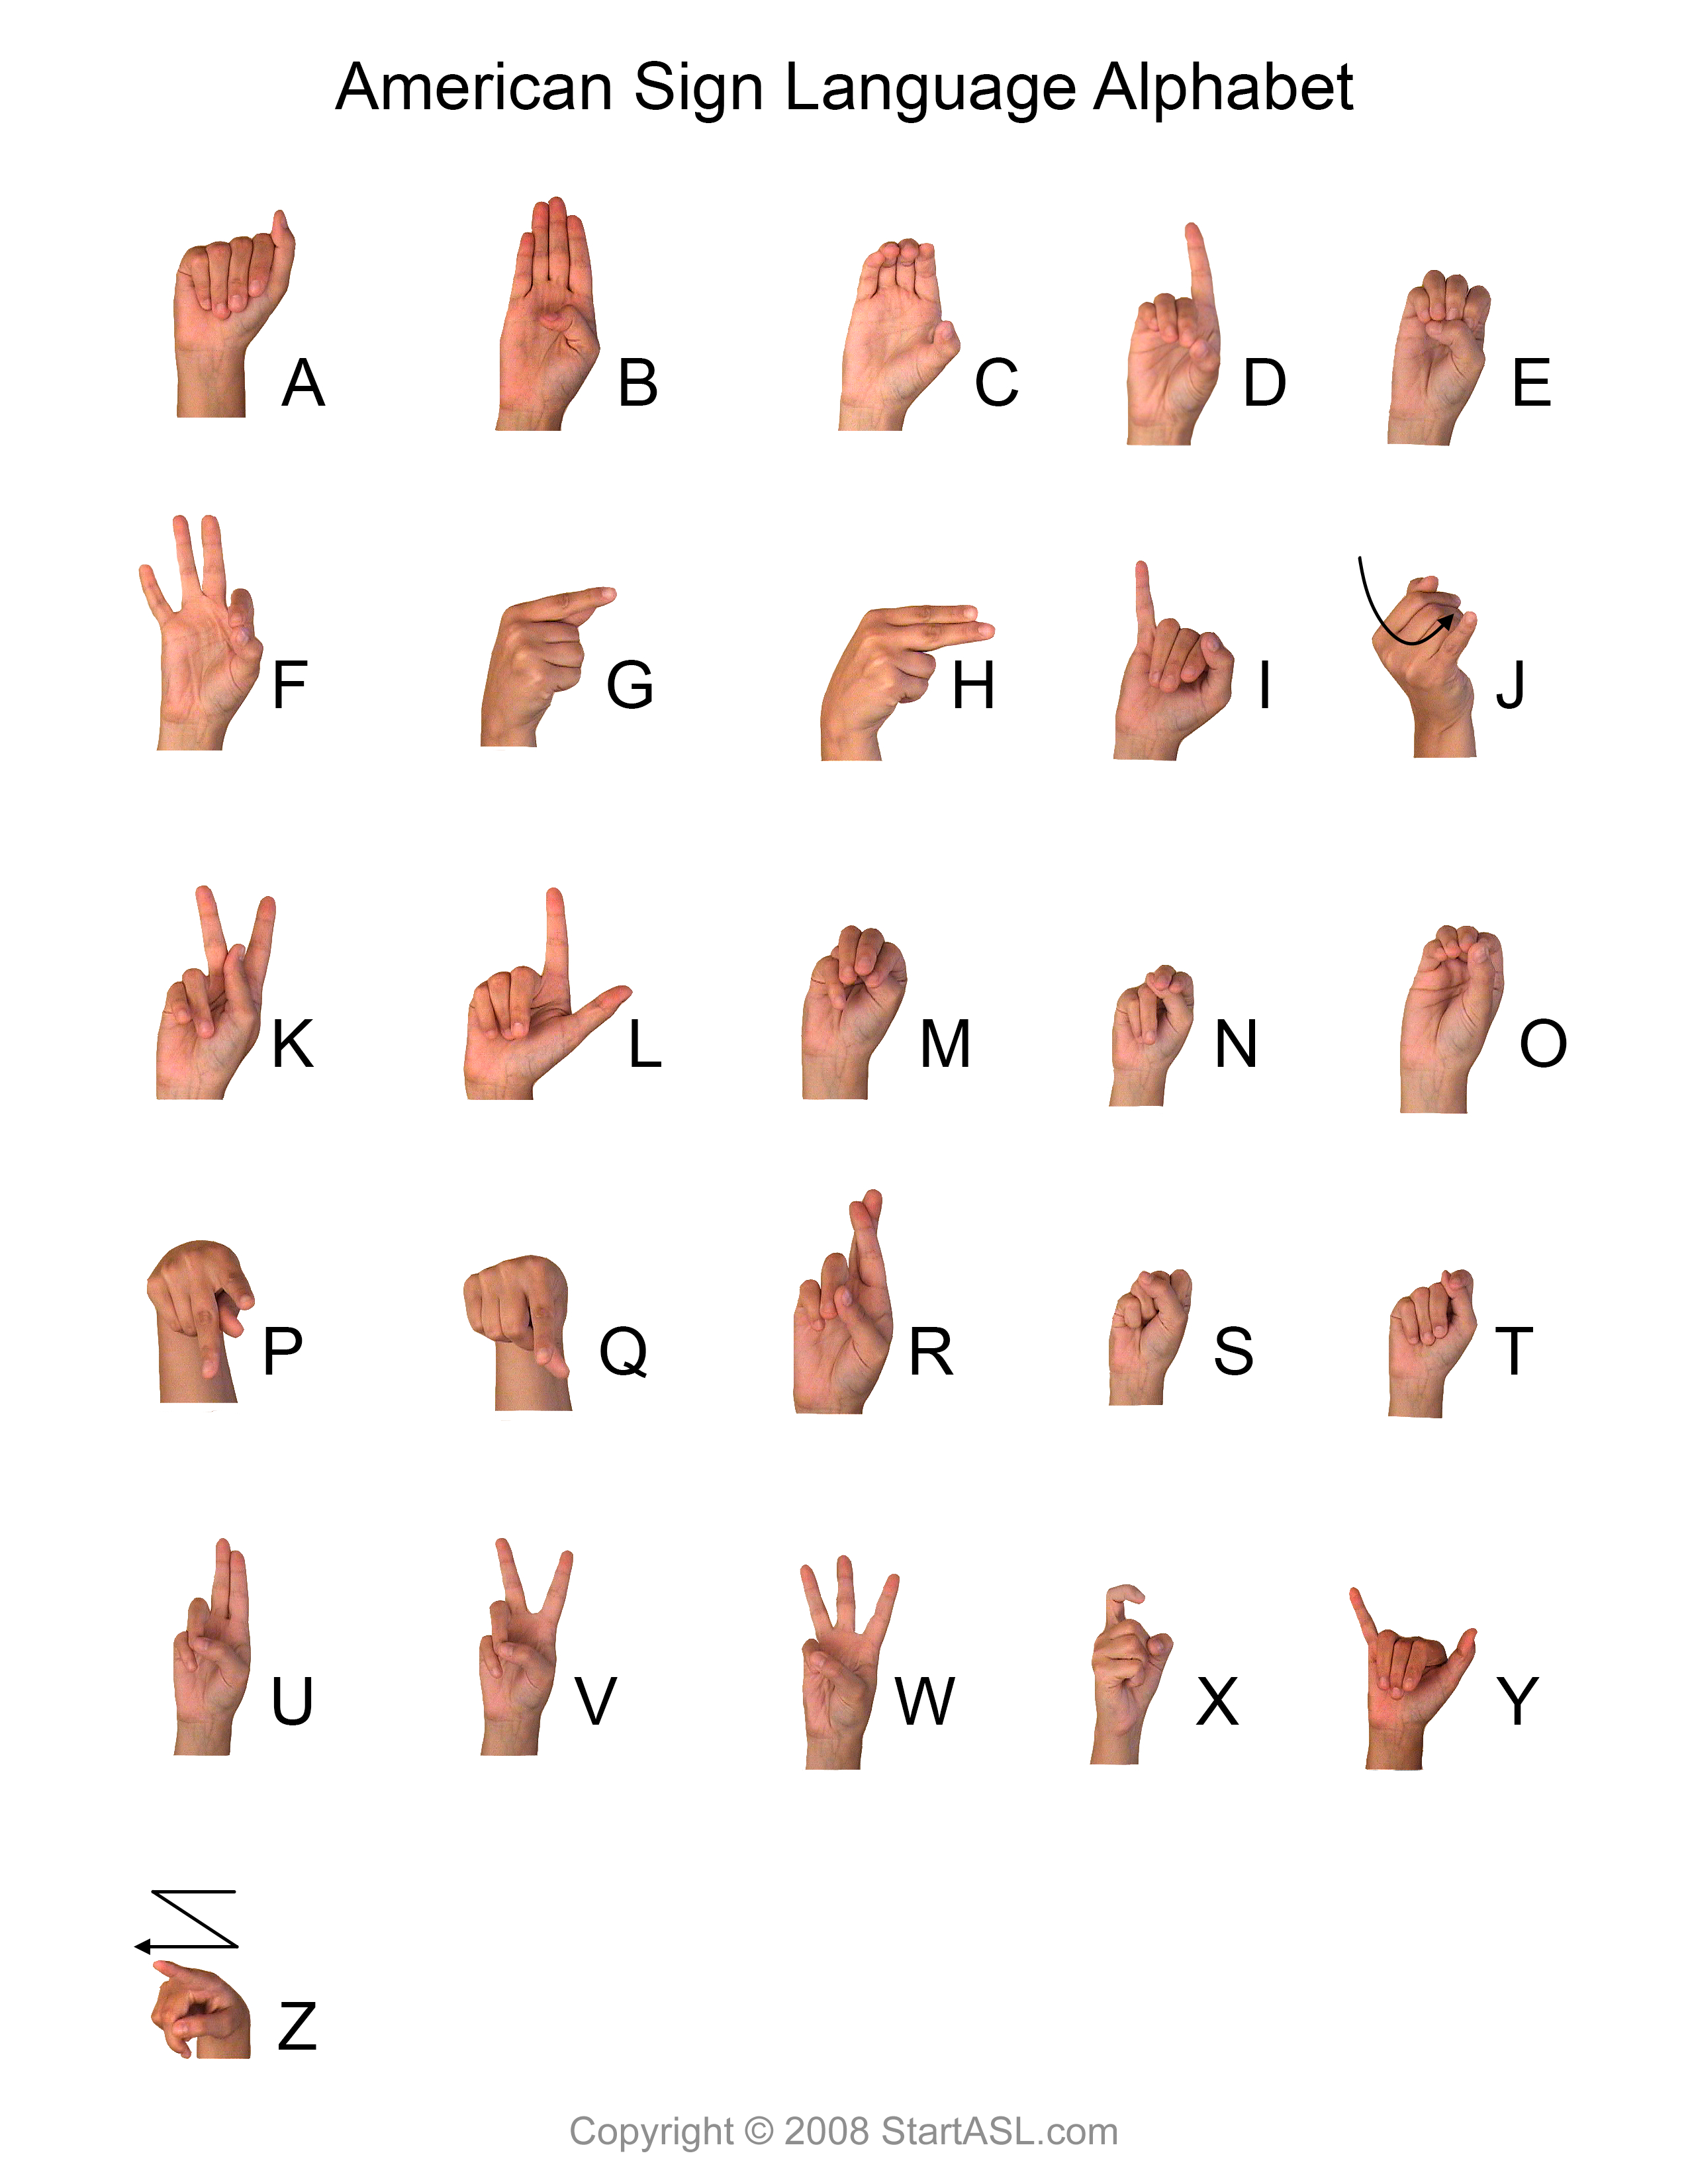 Sign Language Alphabet | 6 Free Downloads To Learn It Fast - Start Asl - Spanish Alphabet Flashcards Free Printable